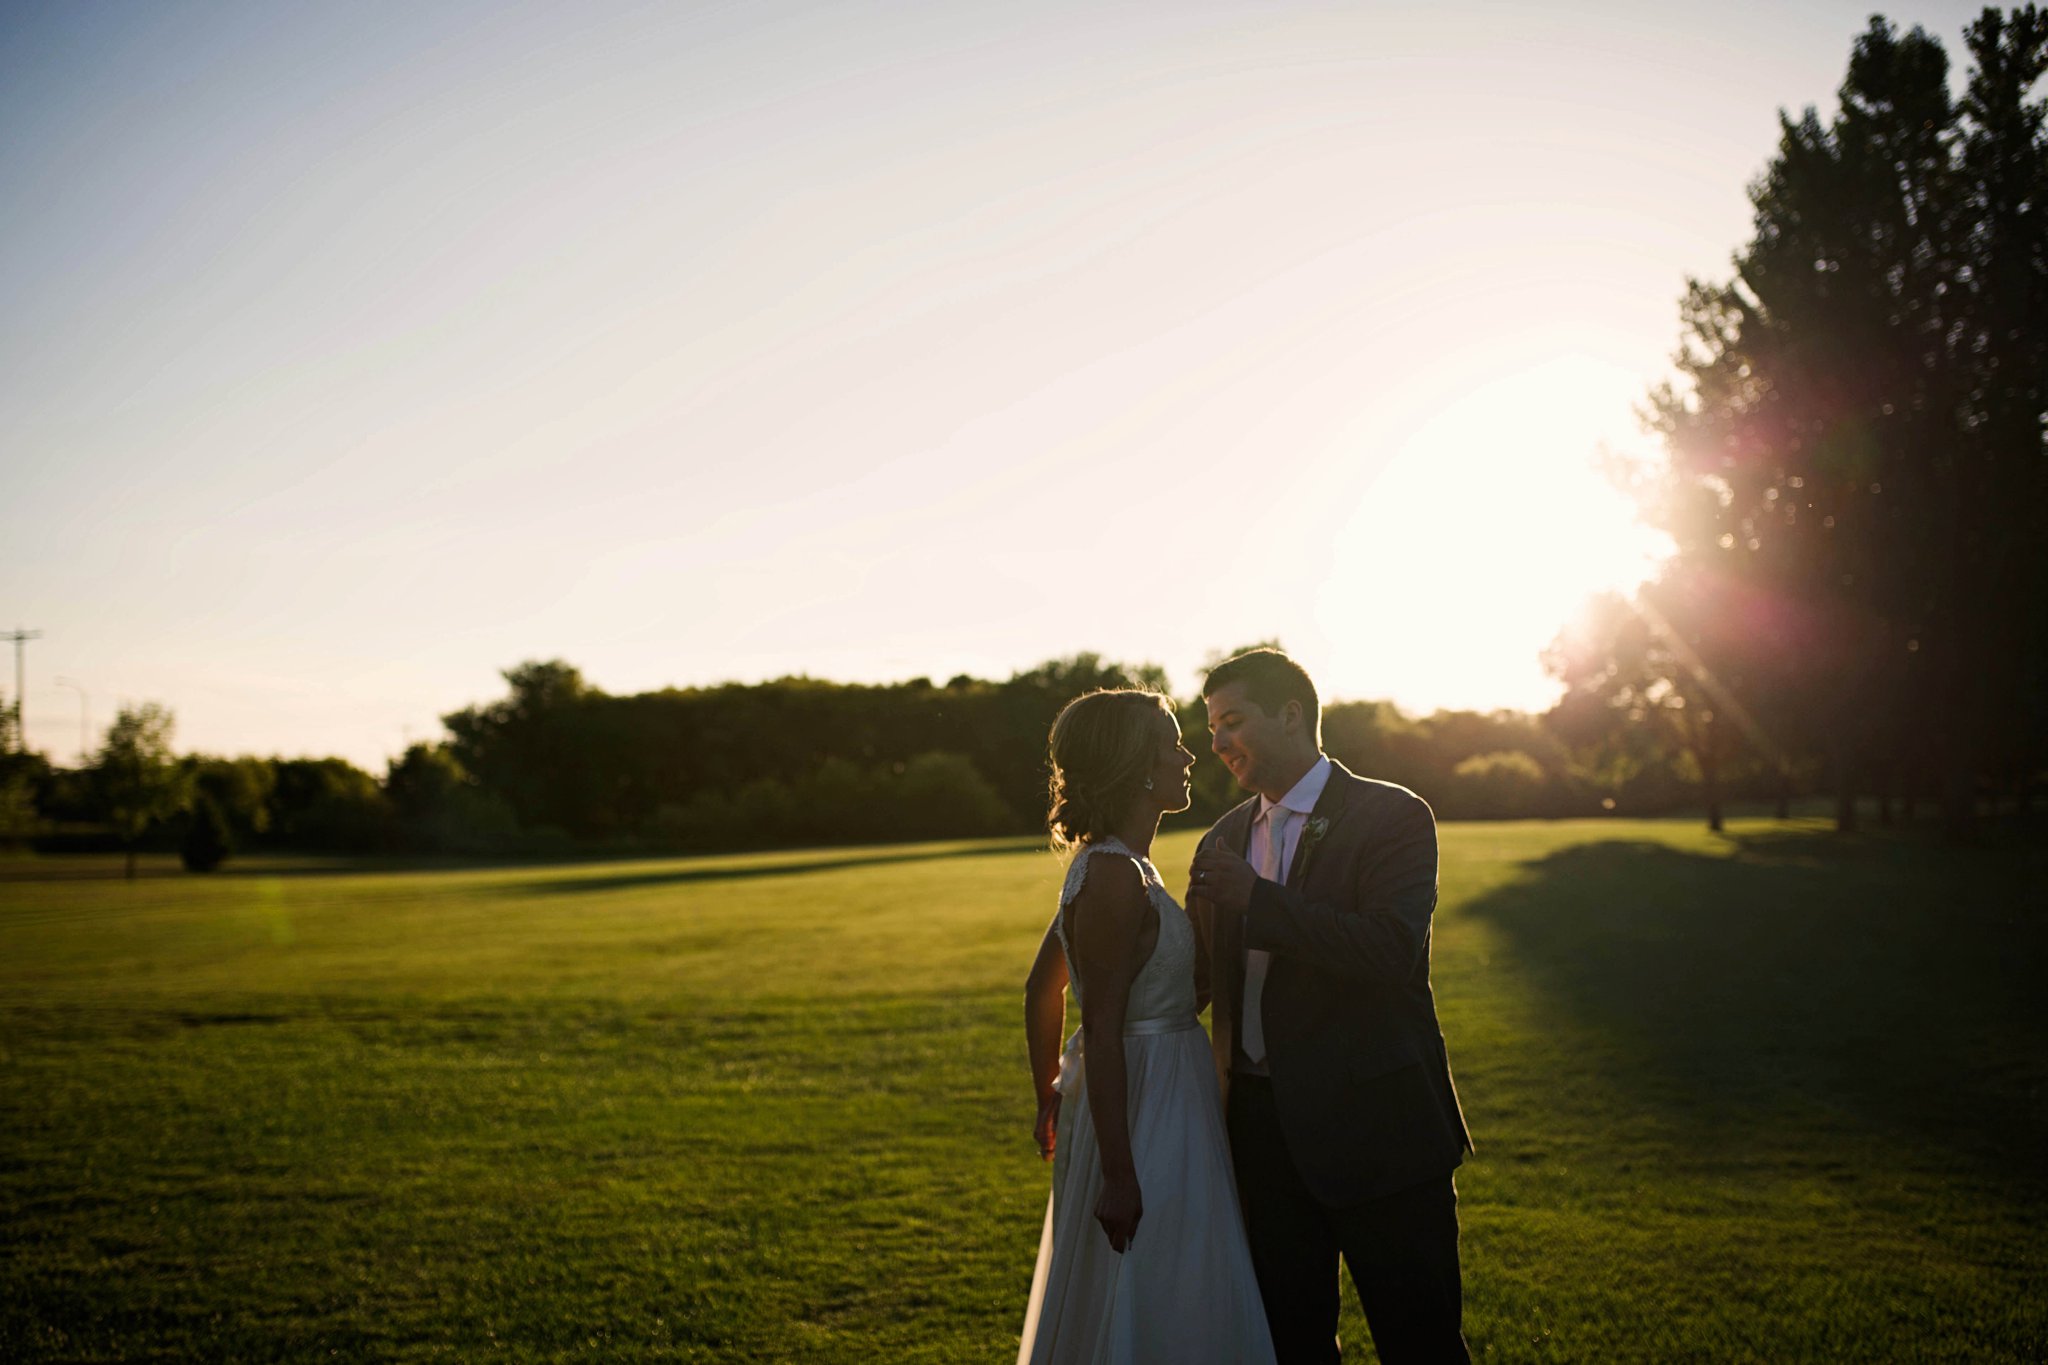 Sioux Falls Wedding Photos | Destination Photographer | Felicia The Photographer | Brandon Golf Club | Bride and Groom | Golden Hour | Walking | Dark and Moody